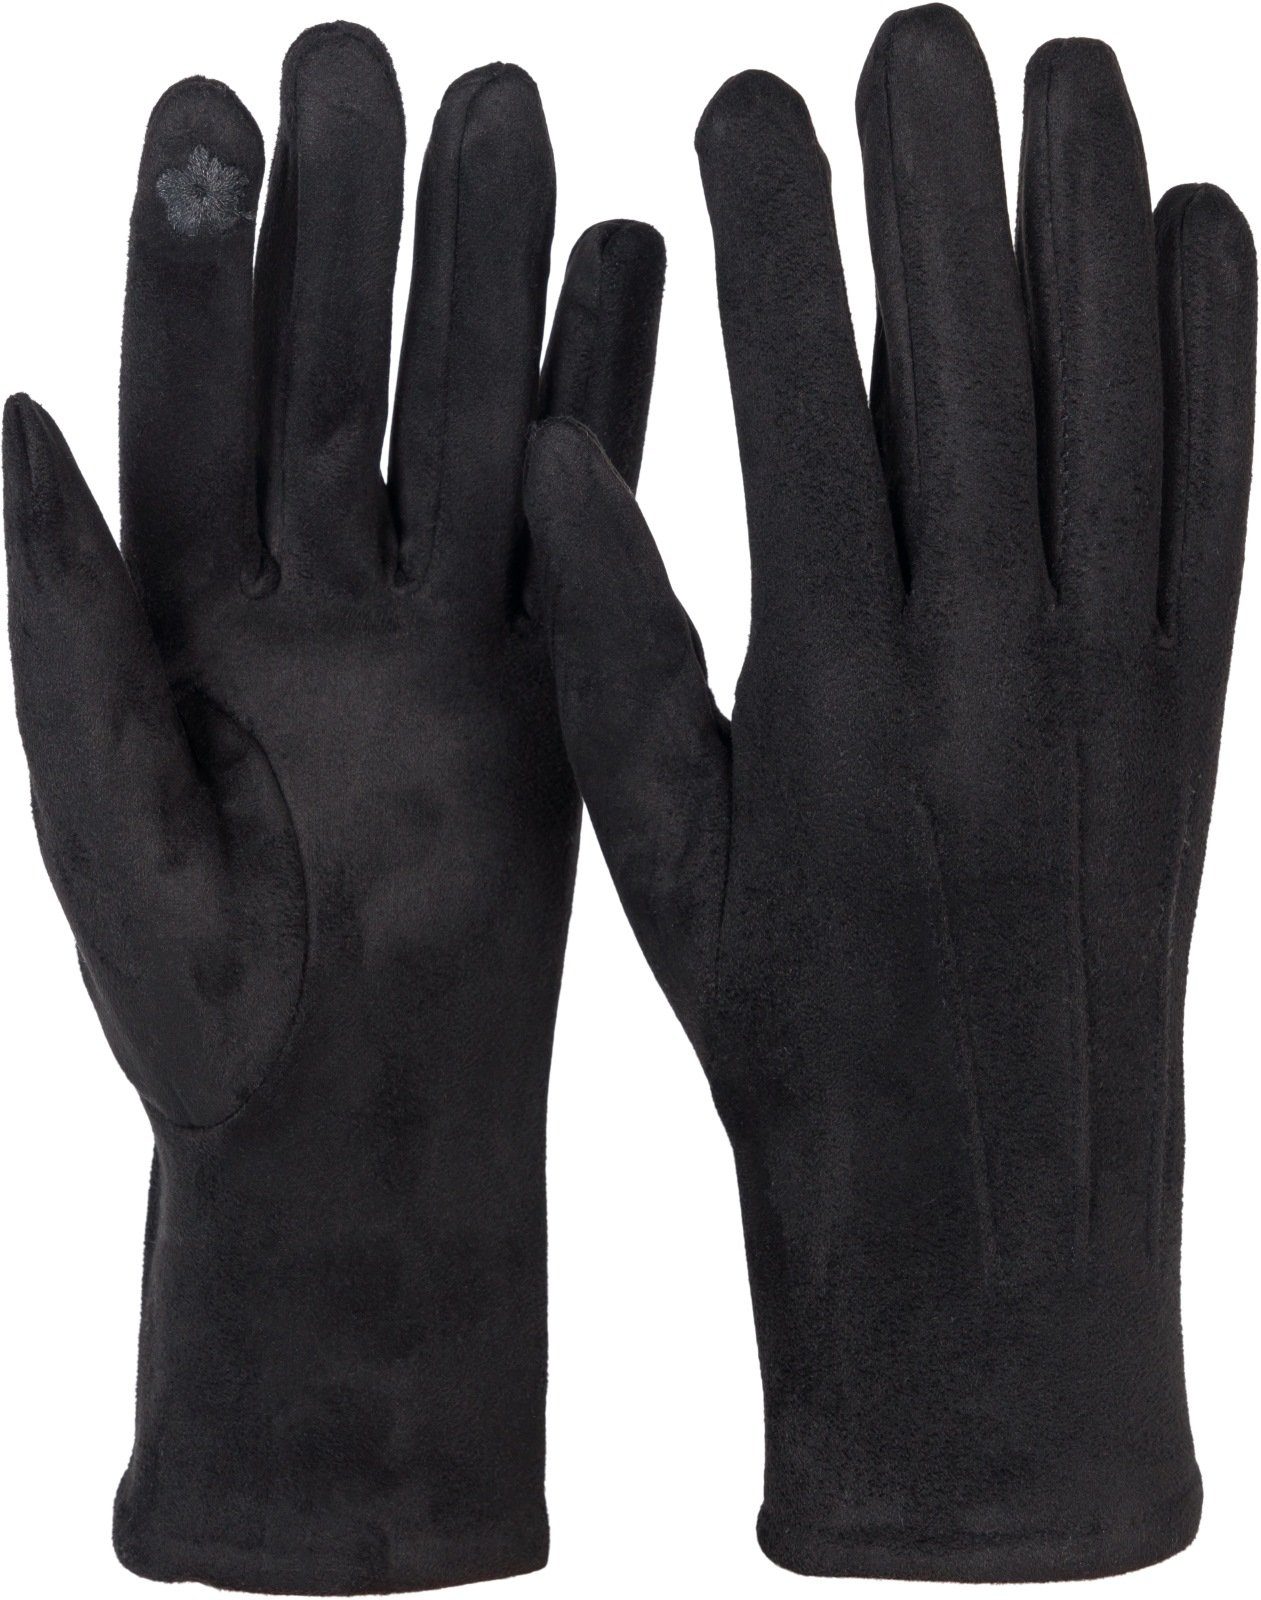 styleBREAKER Fleecehandschuhe Einfarbige Touchscreen Handschuhe Ziernähte Schwarz